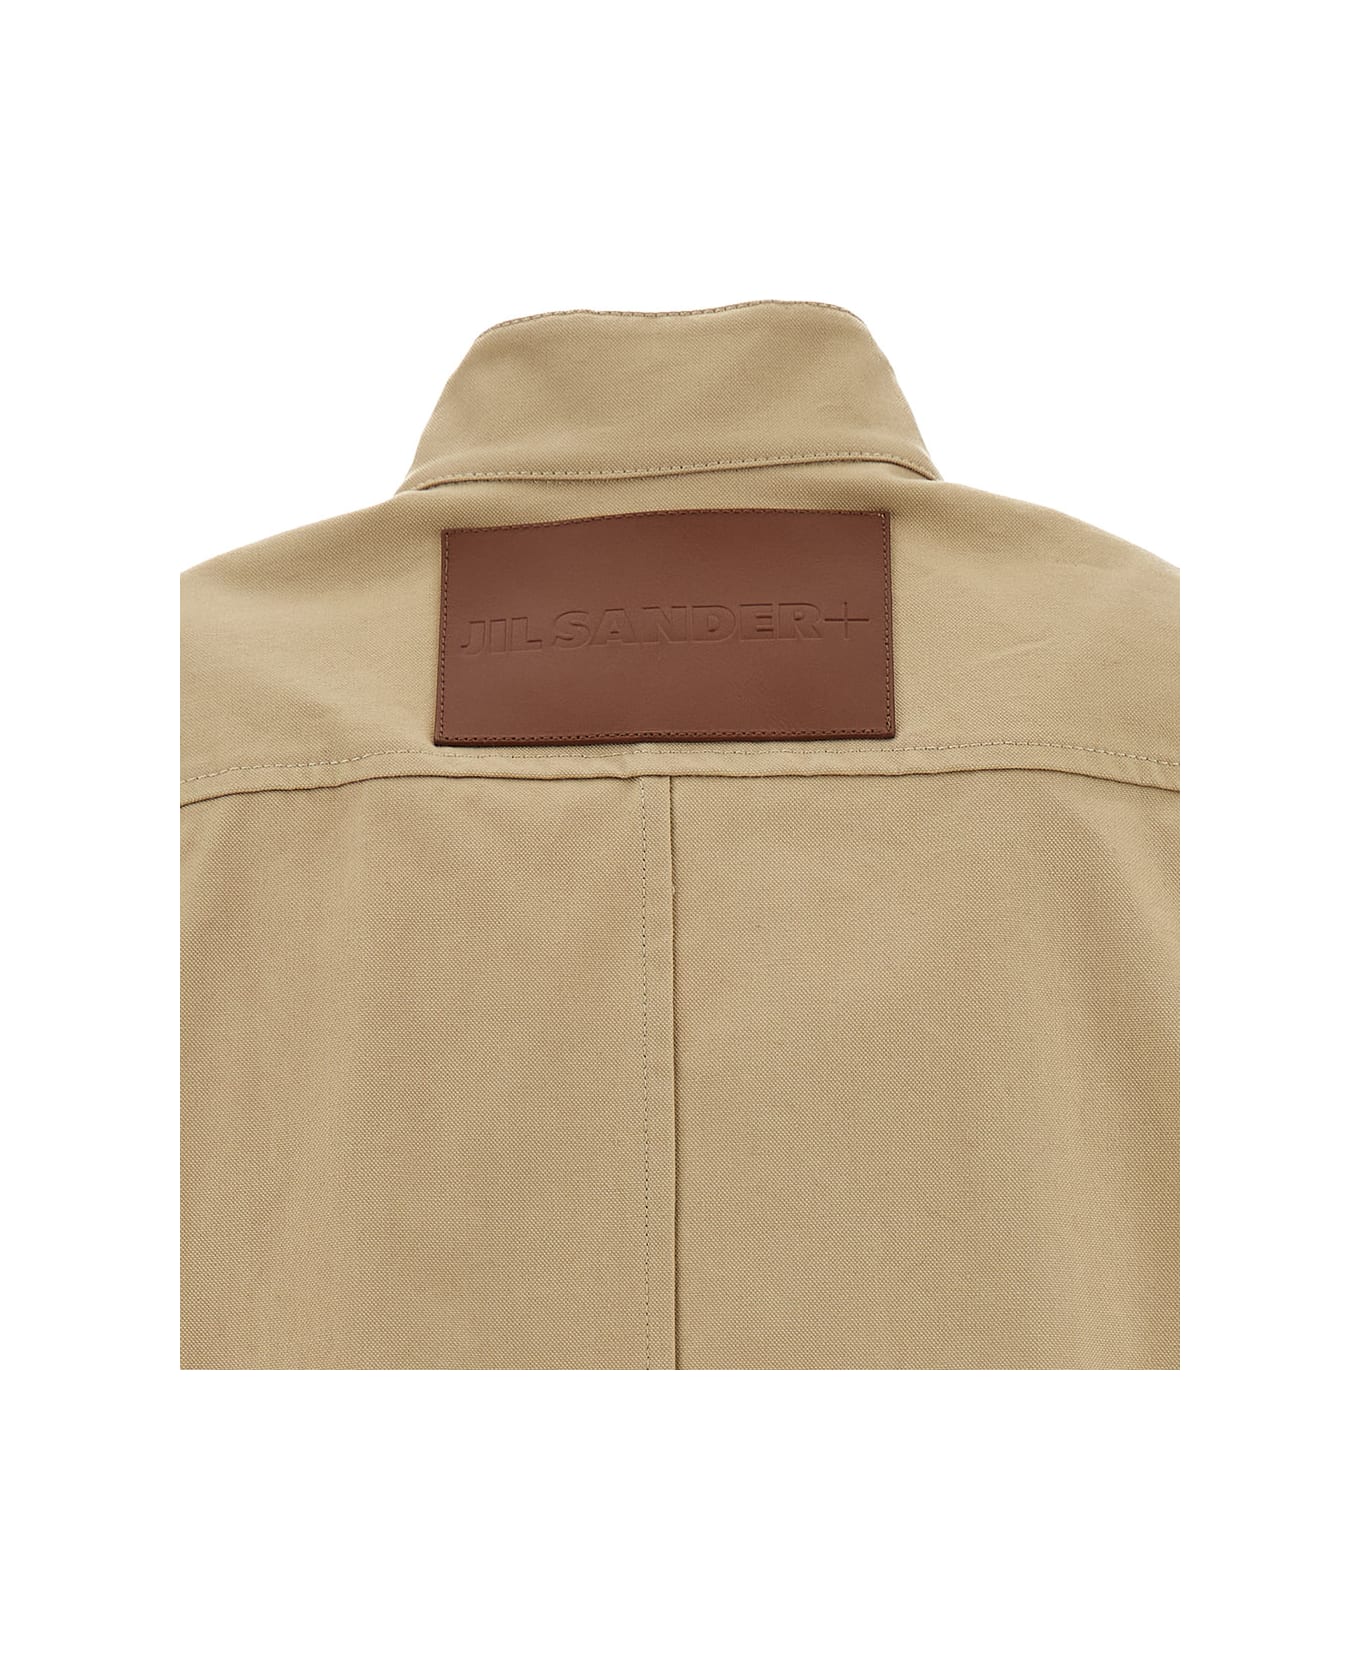 Jil Sander Beige Jacket With Leather Logo Patch In Cotton Canvas Woman - Beige